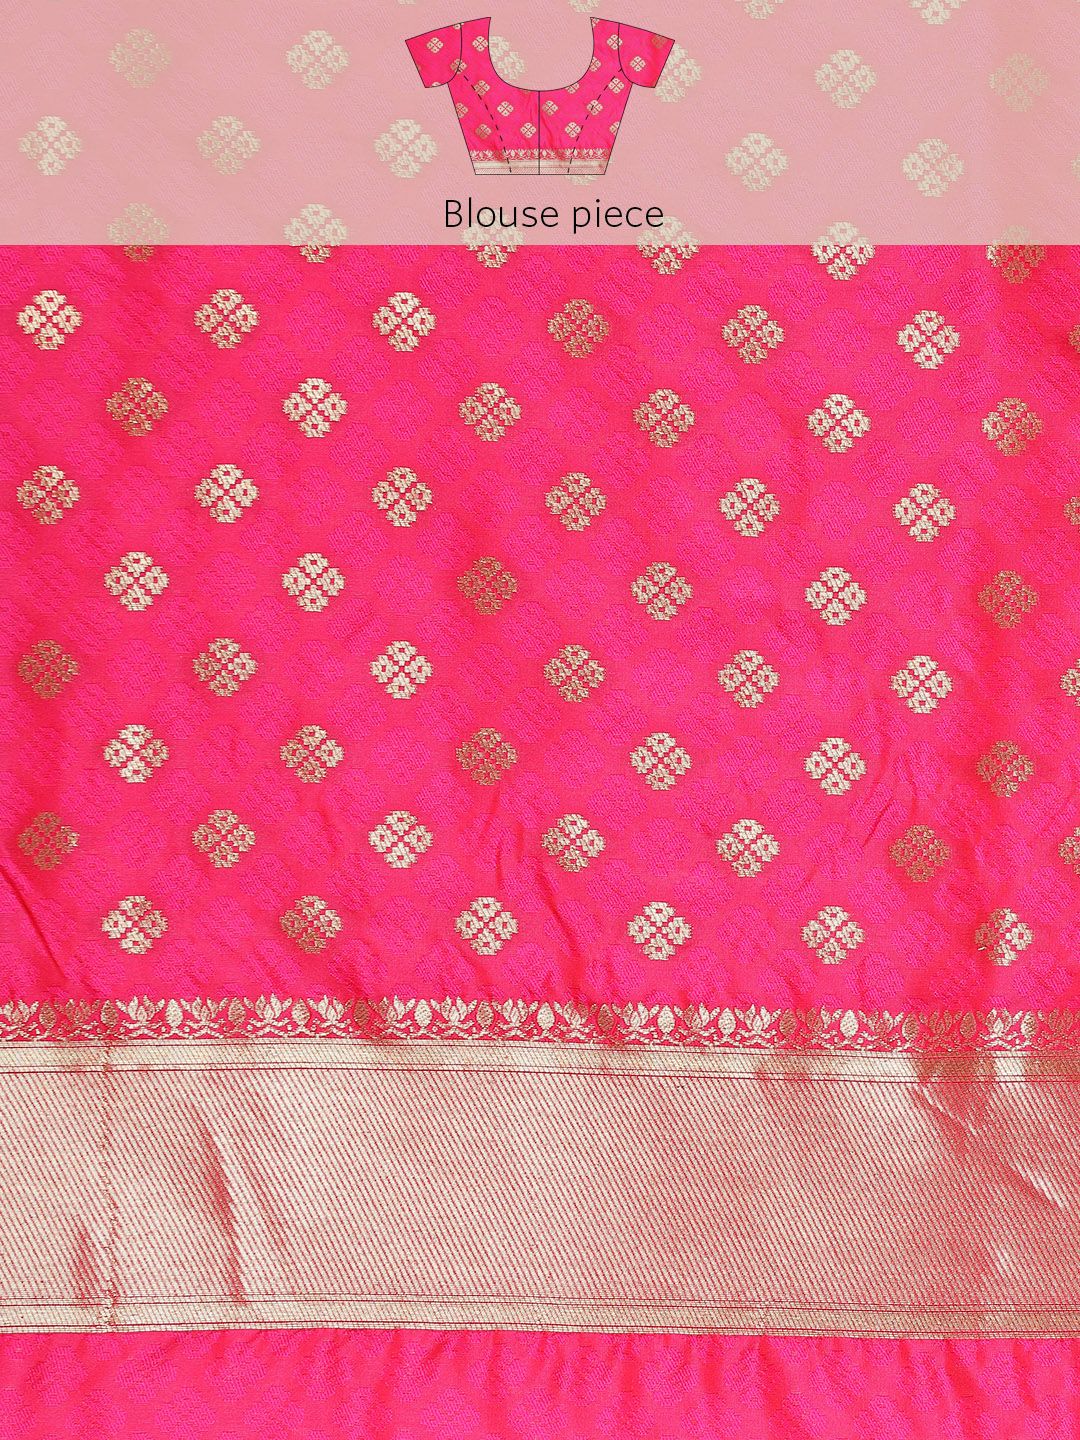 Pink Color Exclusive Banarasi Silk Saree and Beautiful Meenakari & Zari Work  With Rich Pallu